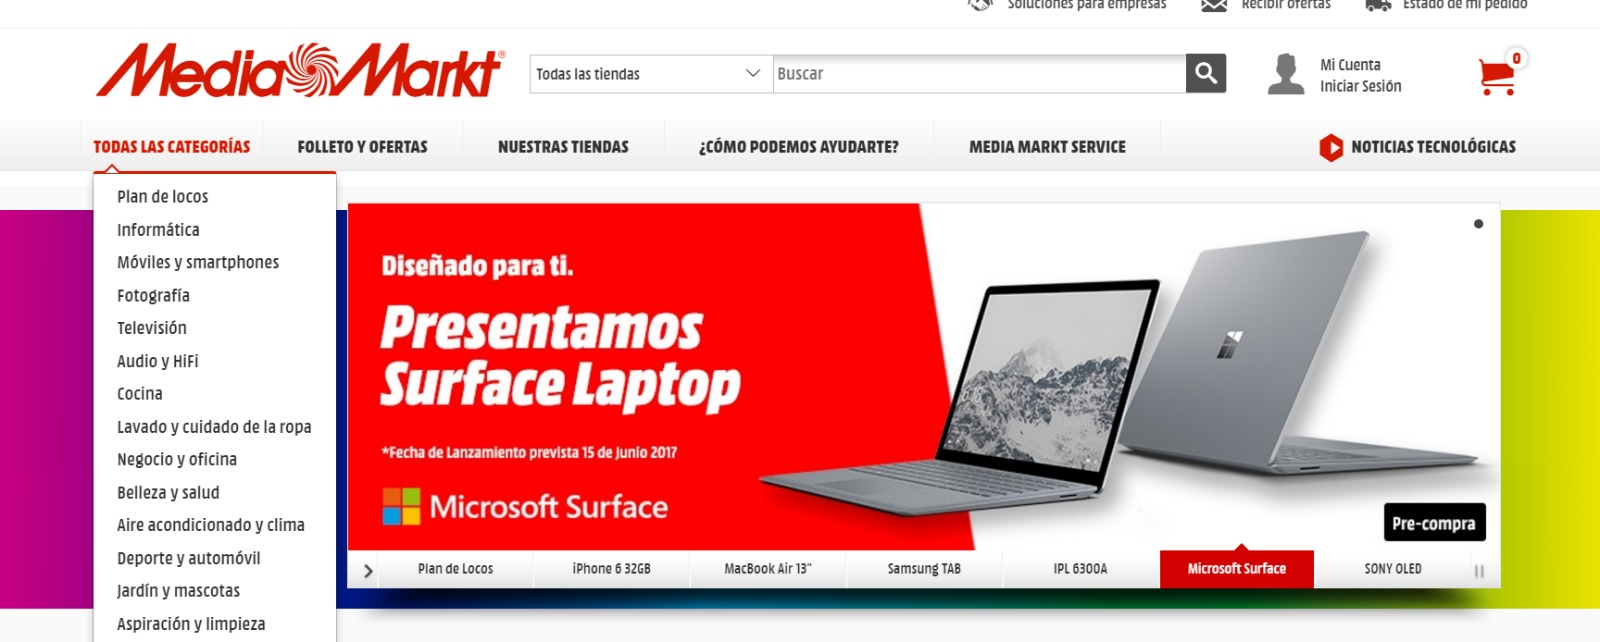 surface laptop mediamarkt